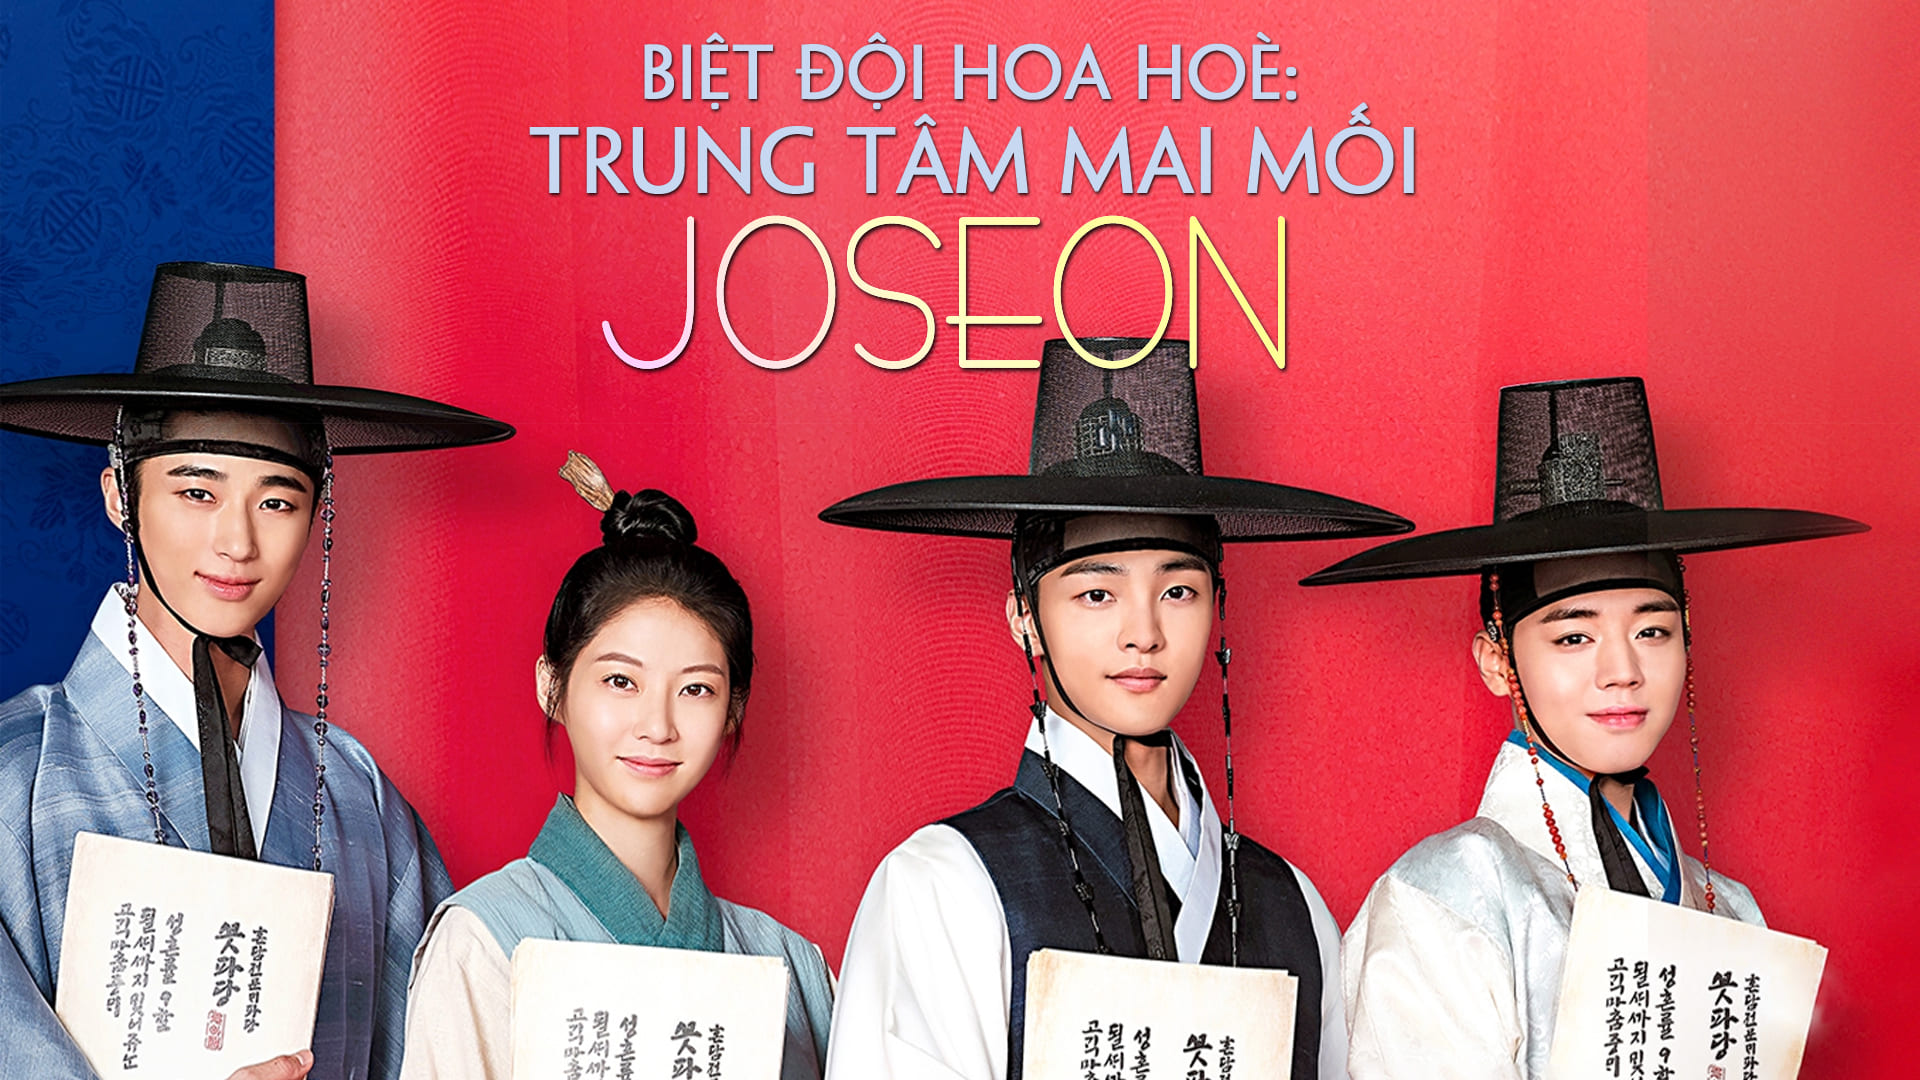 Phim-Biet-Doi-Hoa-Hoe-Trung-Tam-Mai-Moi-Joseon-HD-Vietsub-Thuyet-Minh-02